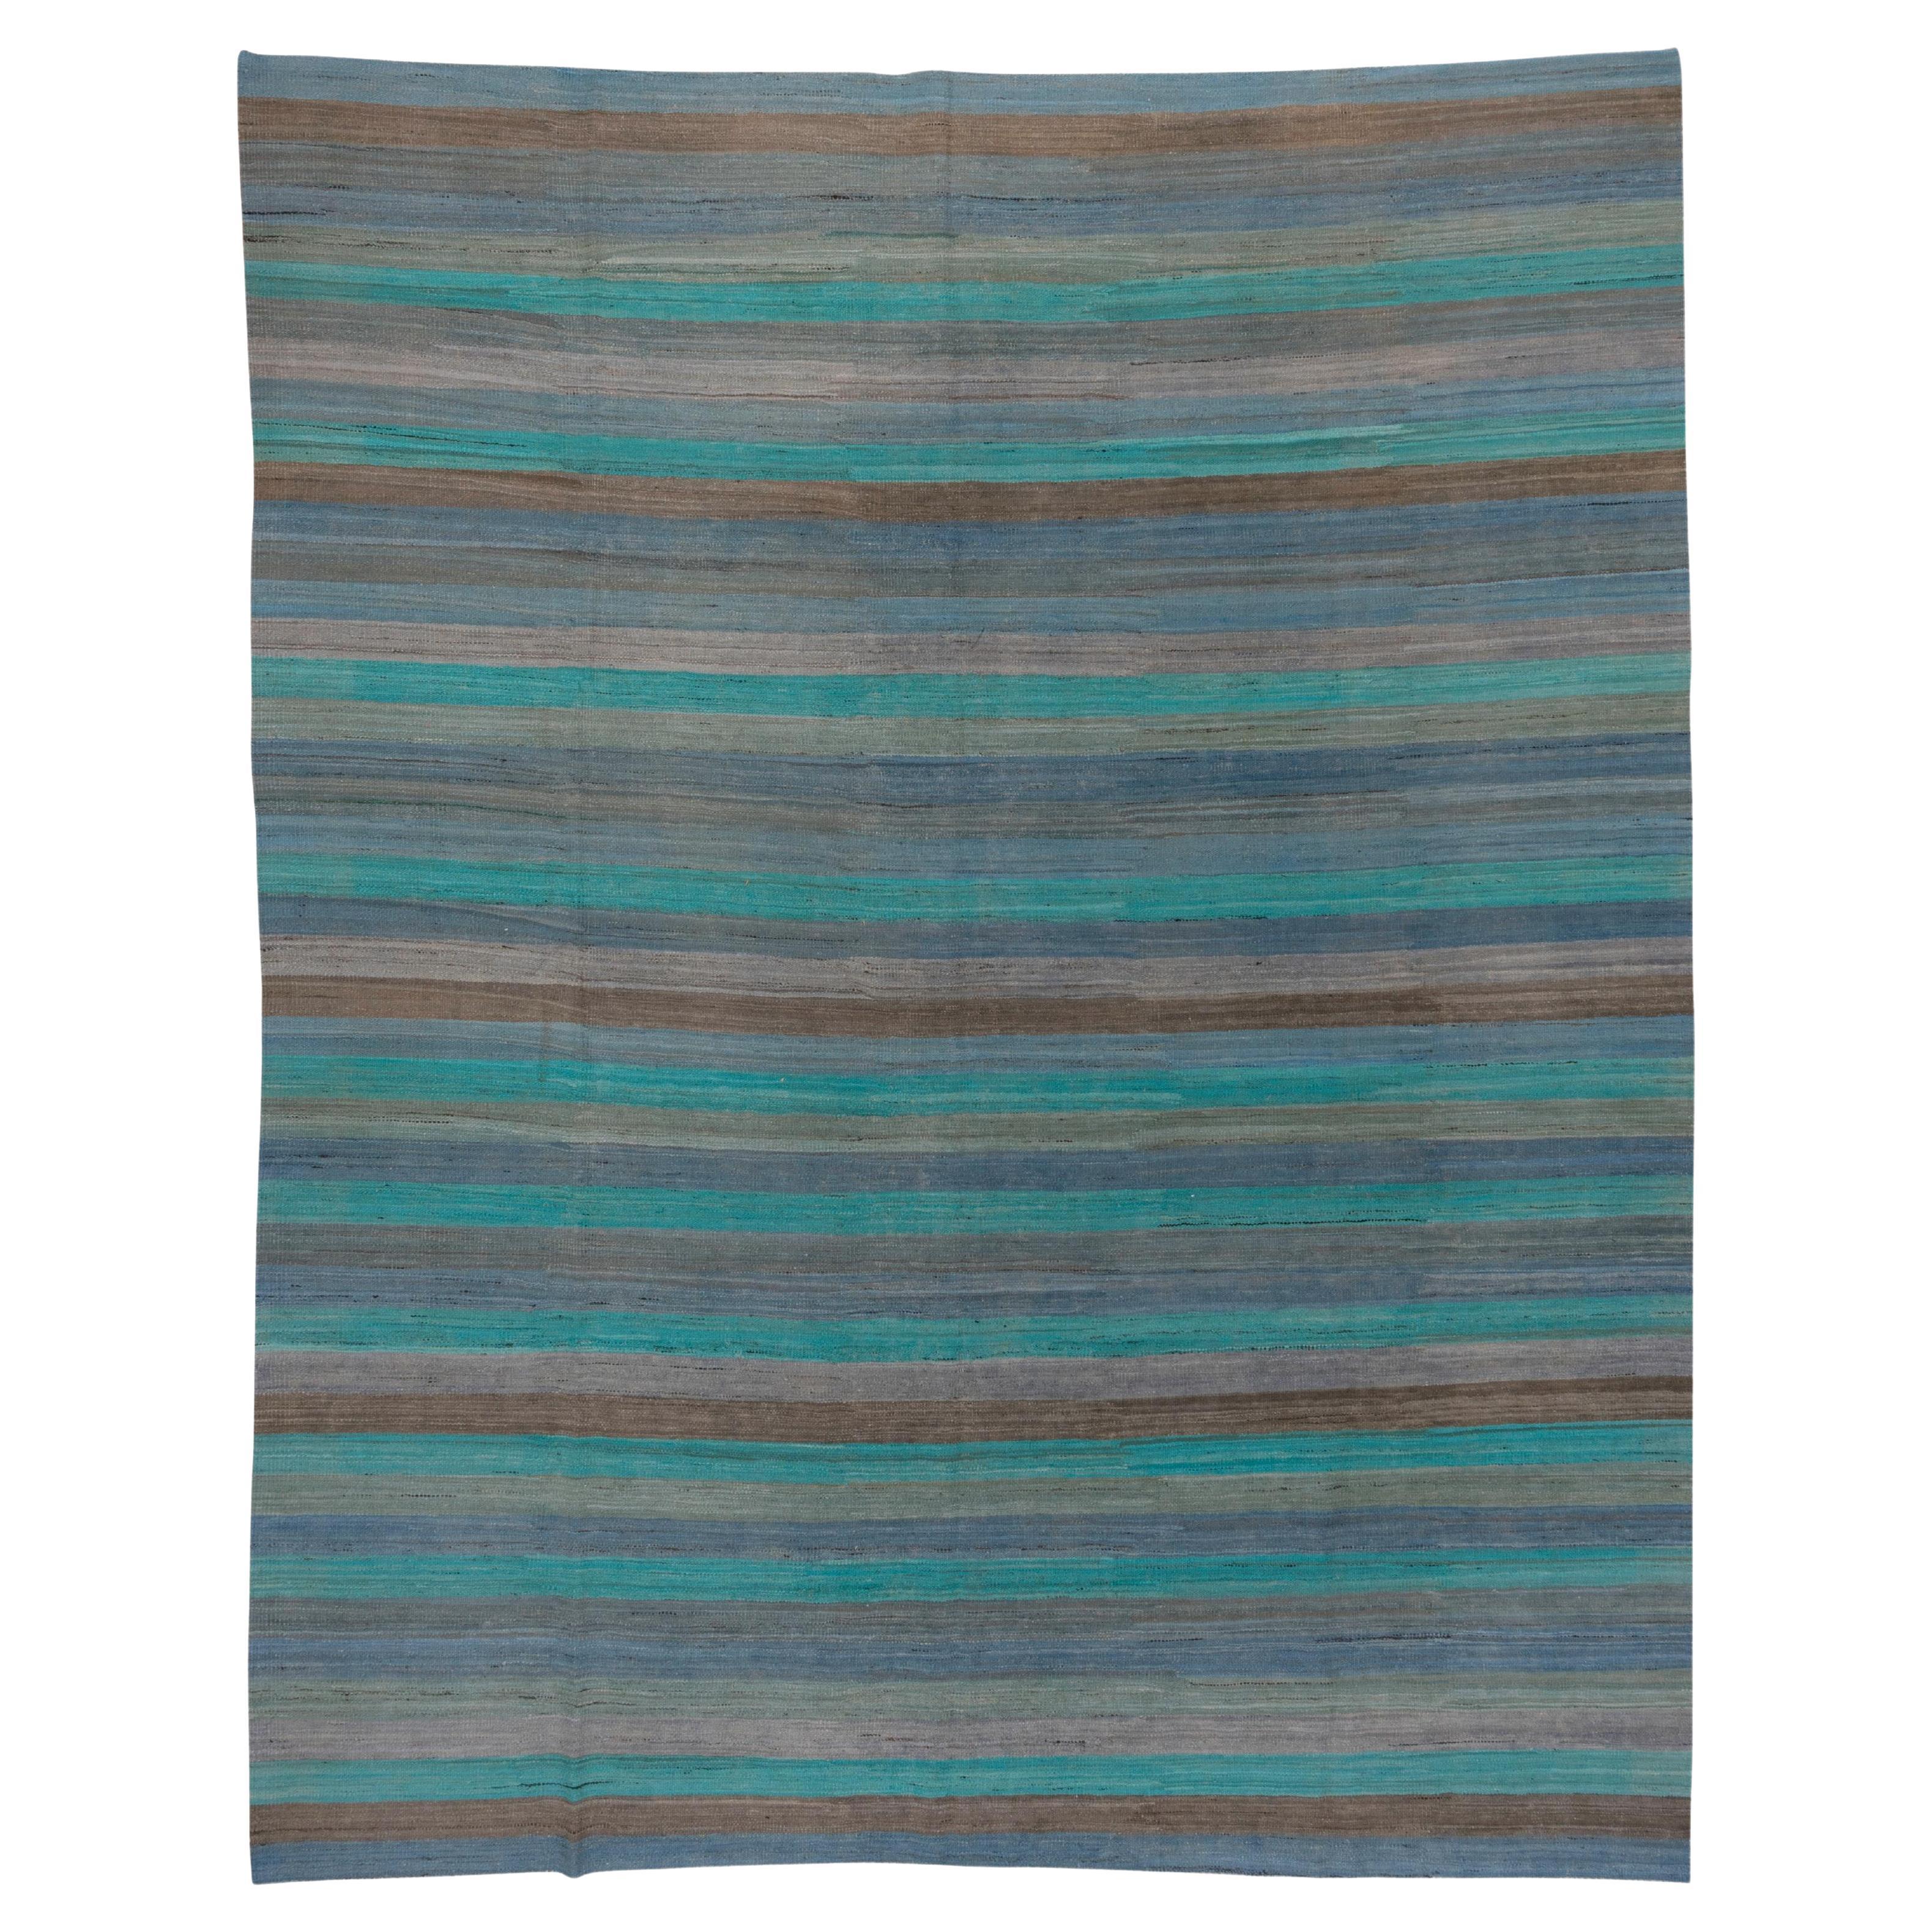 Contemporary Striped Flatweave Area Rug, Blue, Light Sea Green & Brown Tones